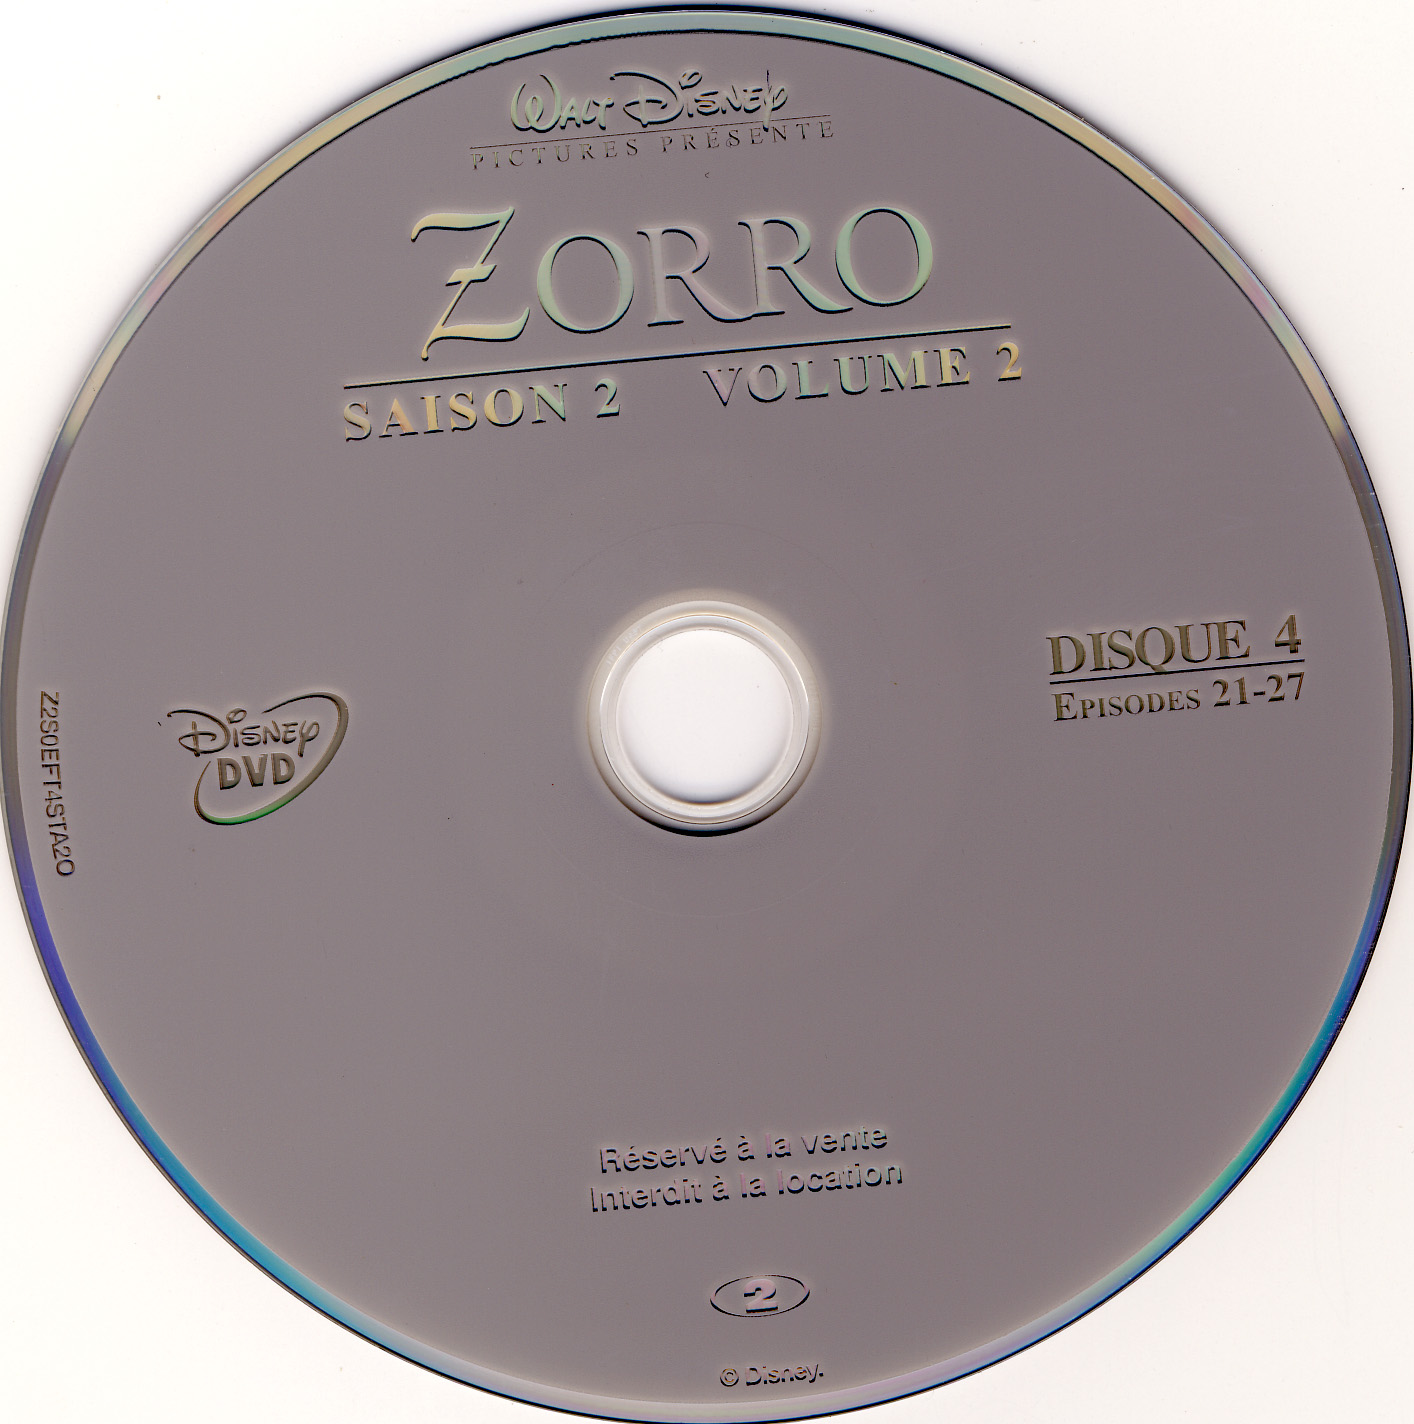 Zorro Saison 2 vol 2 DISC 4